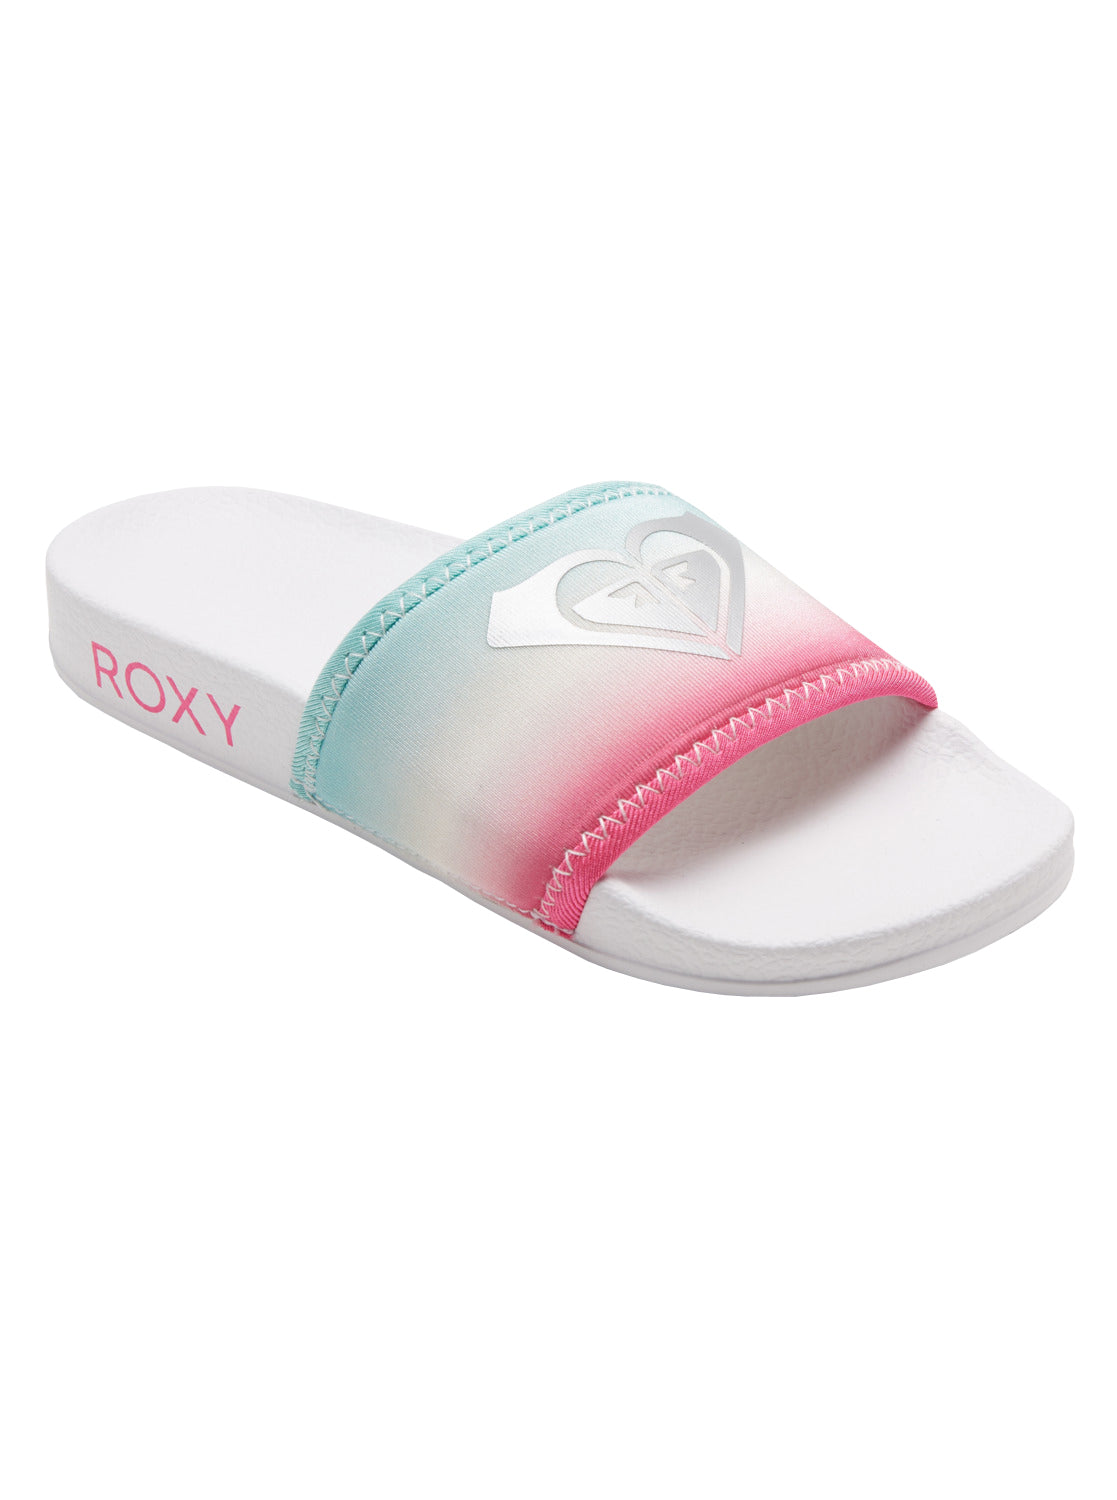 Roxy Slippy Neo Girls Sandal WCQ-White-Crazy Pink-Turquoise 4 Y